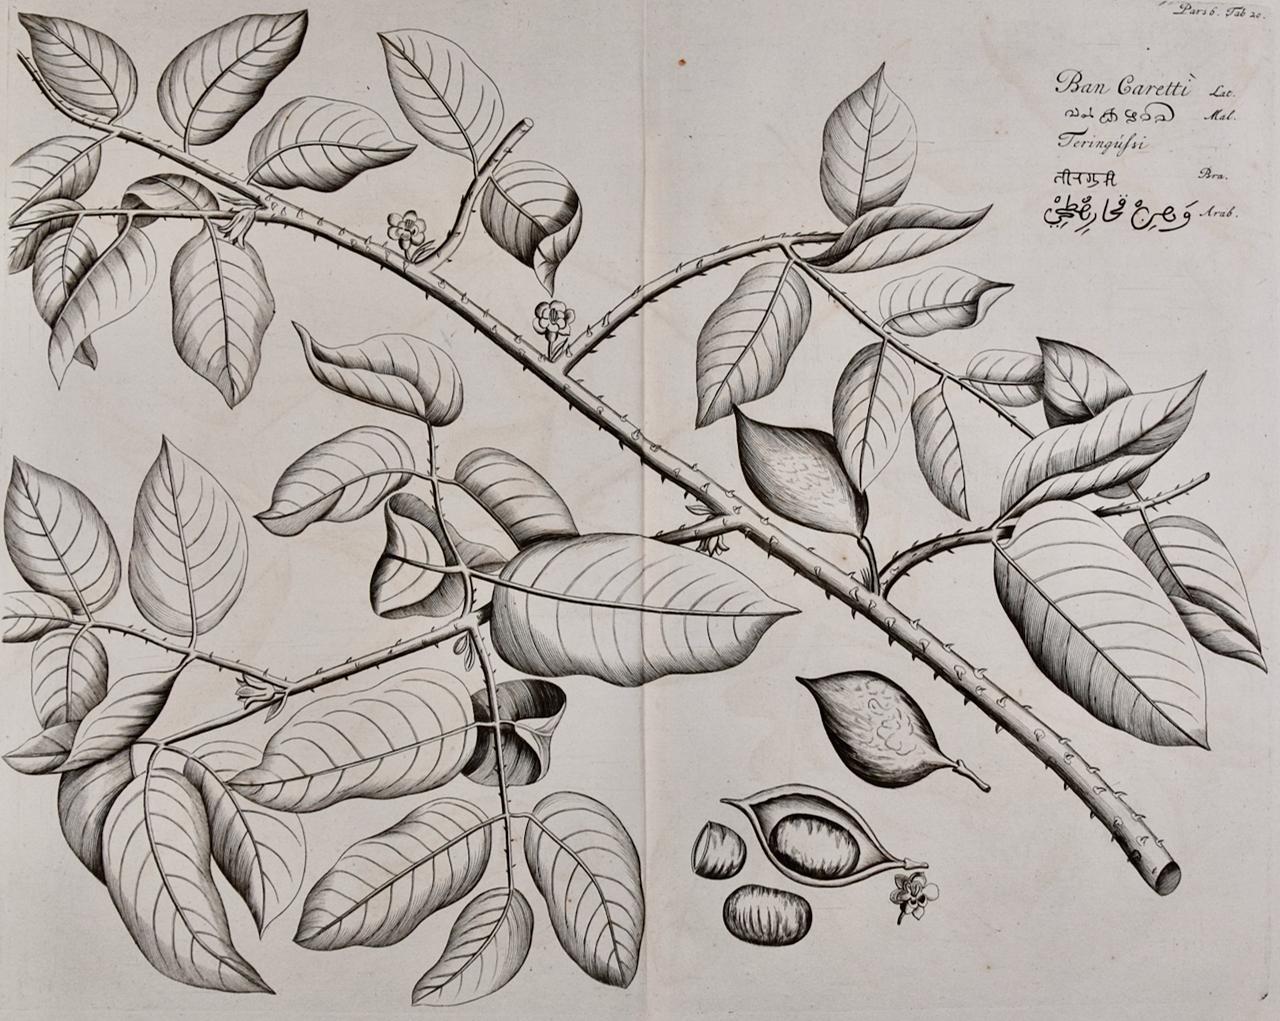 Landscape Print Hendrik Adriaan van Rheede tot Drakenstein - « Ban Caretti », plante à noix de fièvre « Ban Caretti » : gravure du XVIIe siècle de Hendrik van Rheede